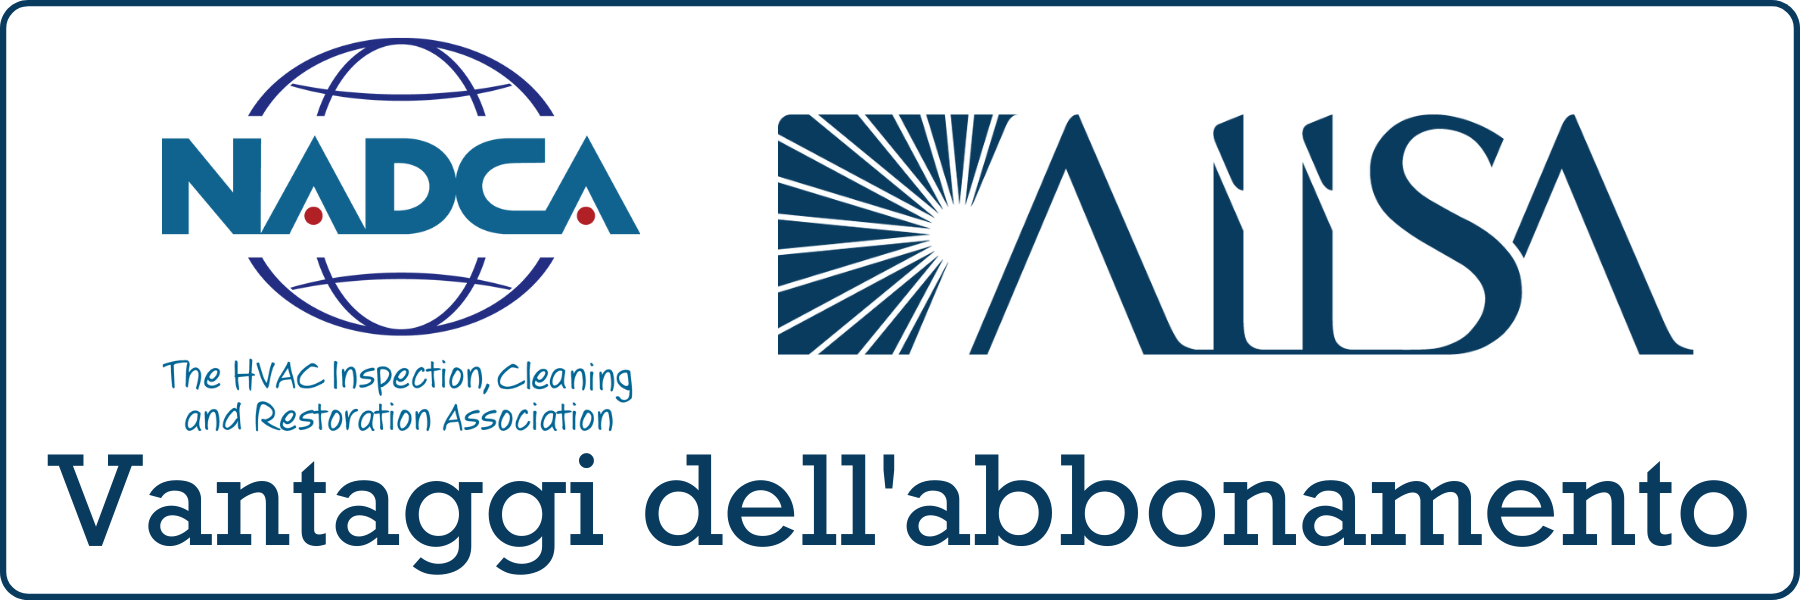 AIISA Member Benefits Brief Italian